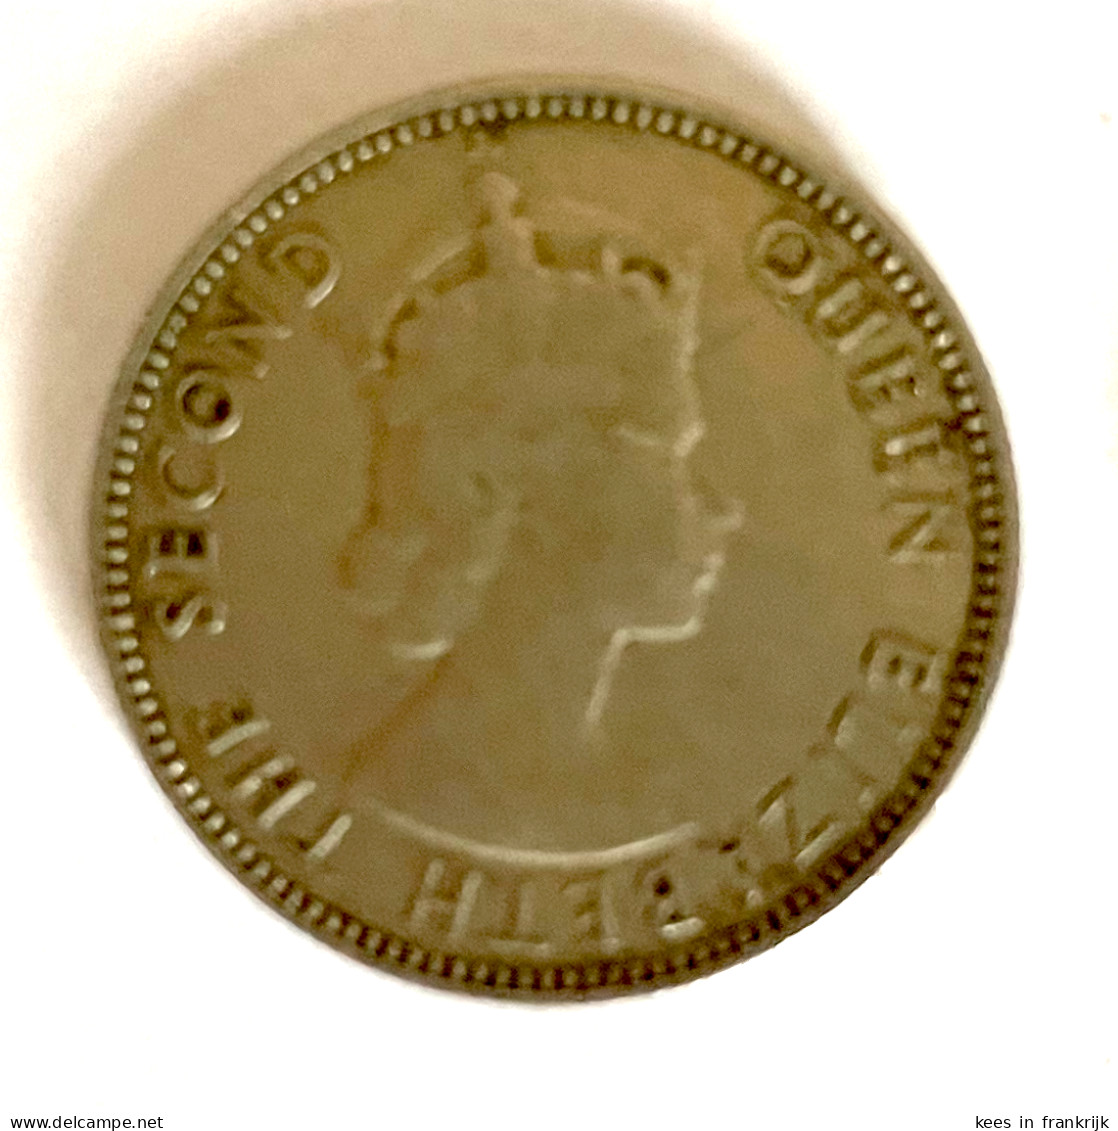 East Africa / Afrique Orientale - 50 Cents 1954 - Queen Elizabeth II - Colonie Britannique